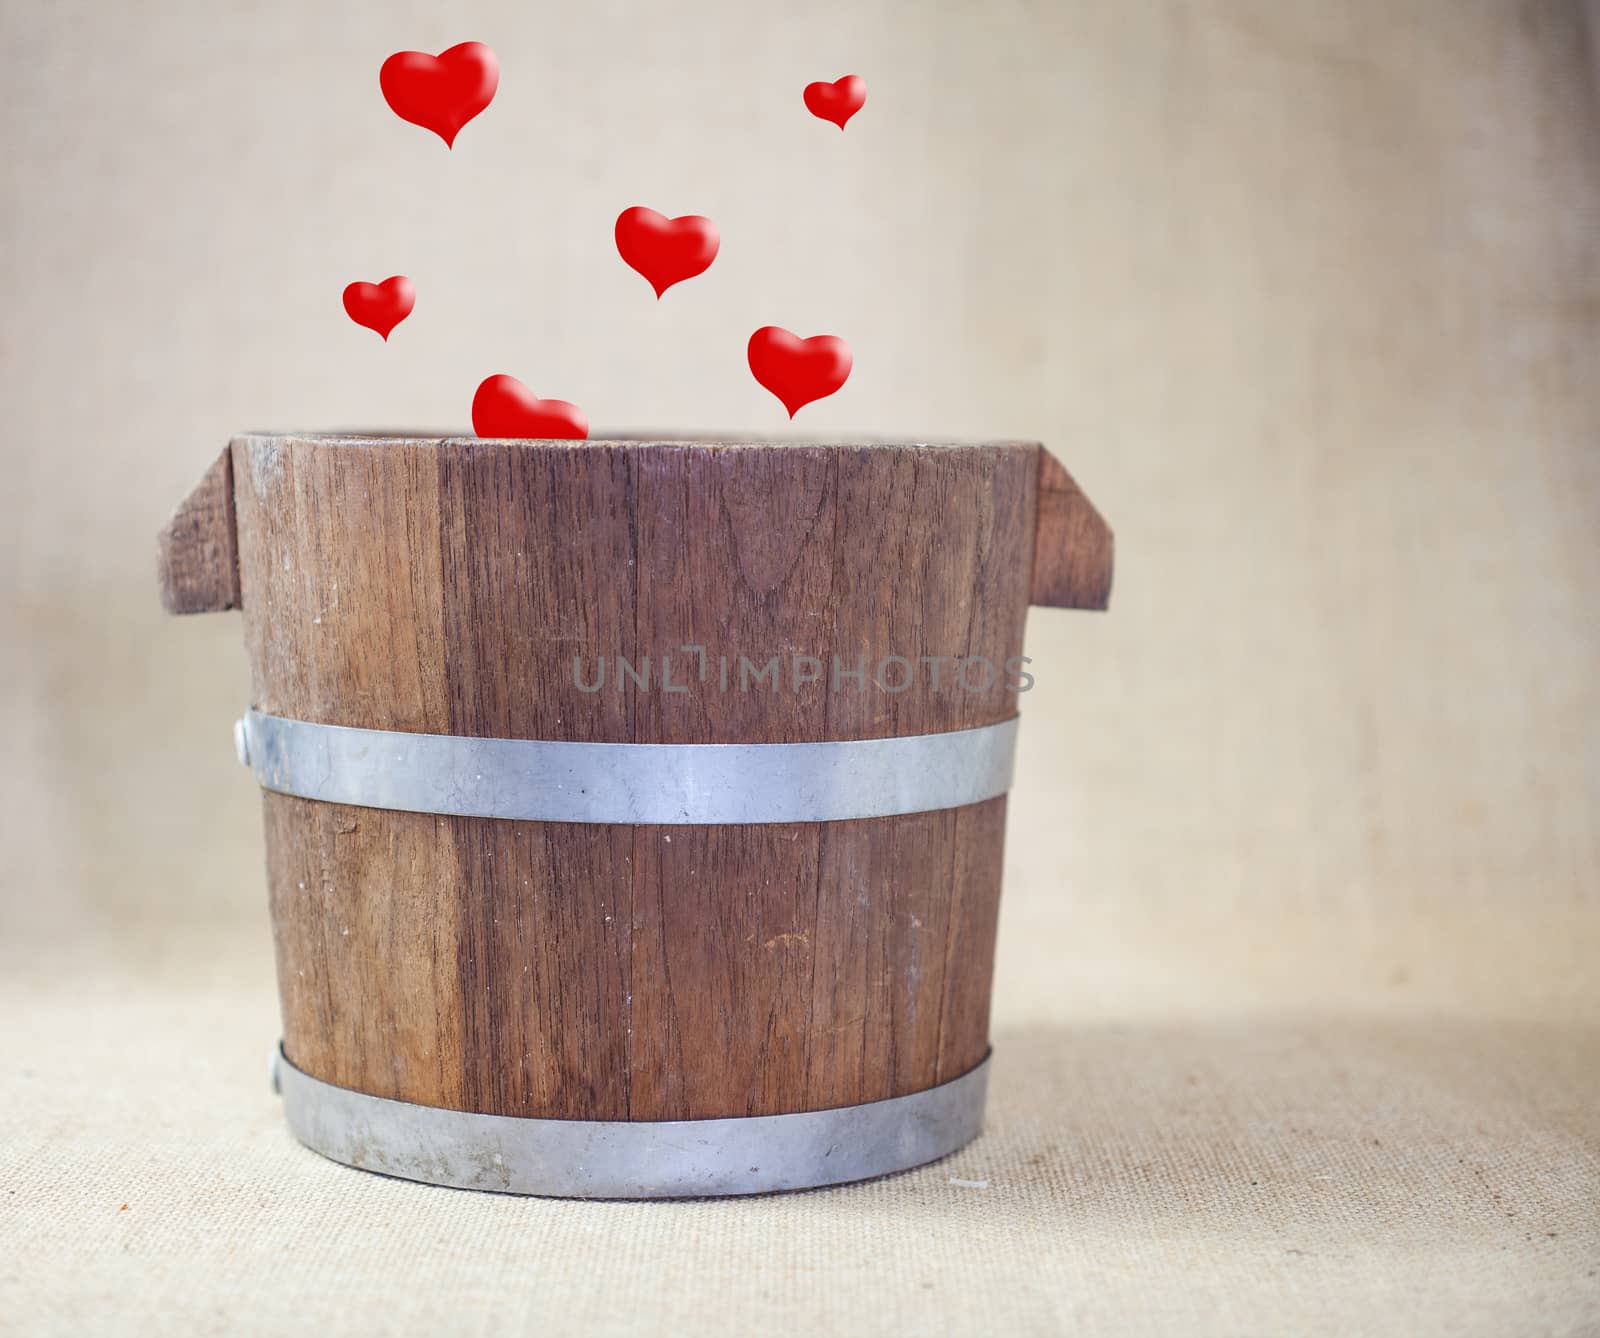 Hearts Drop in Wooden Bucket .